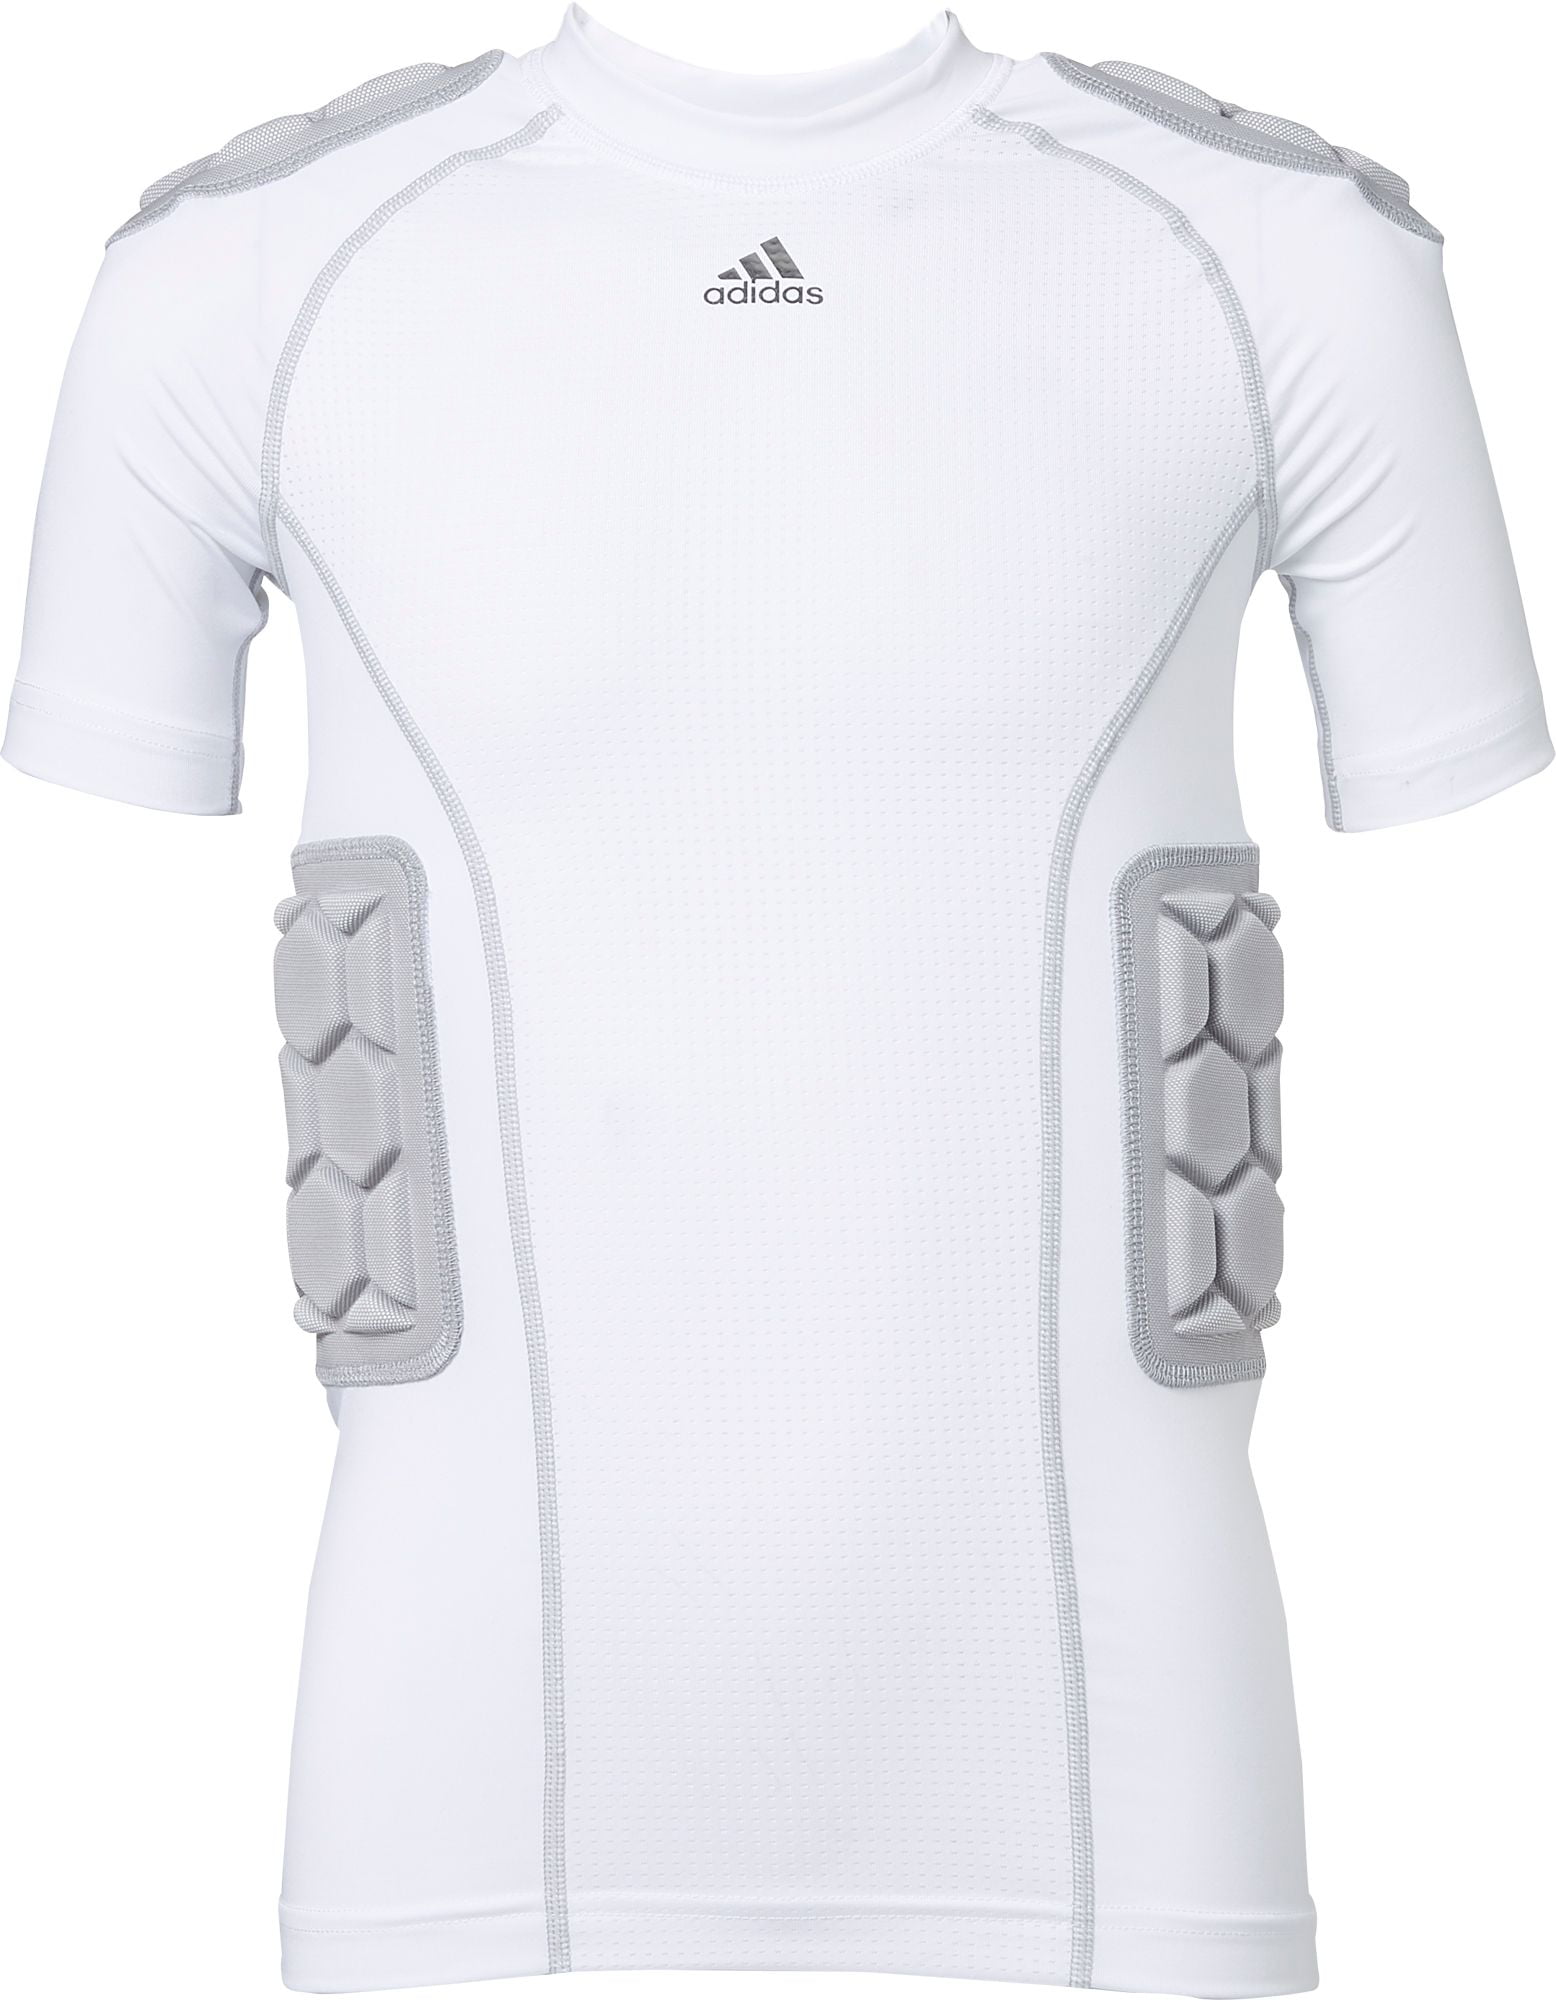 adidas Youth techfit® Football Shirt - Walmart.com